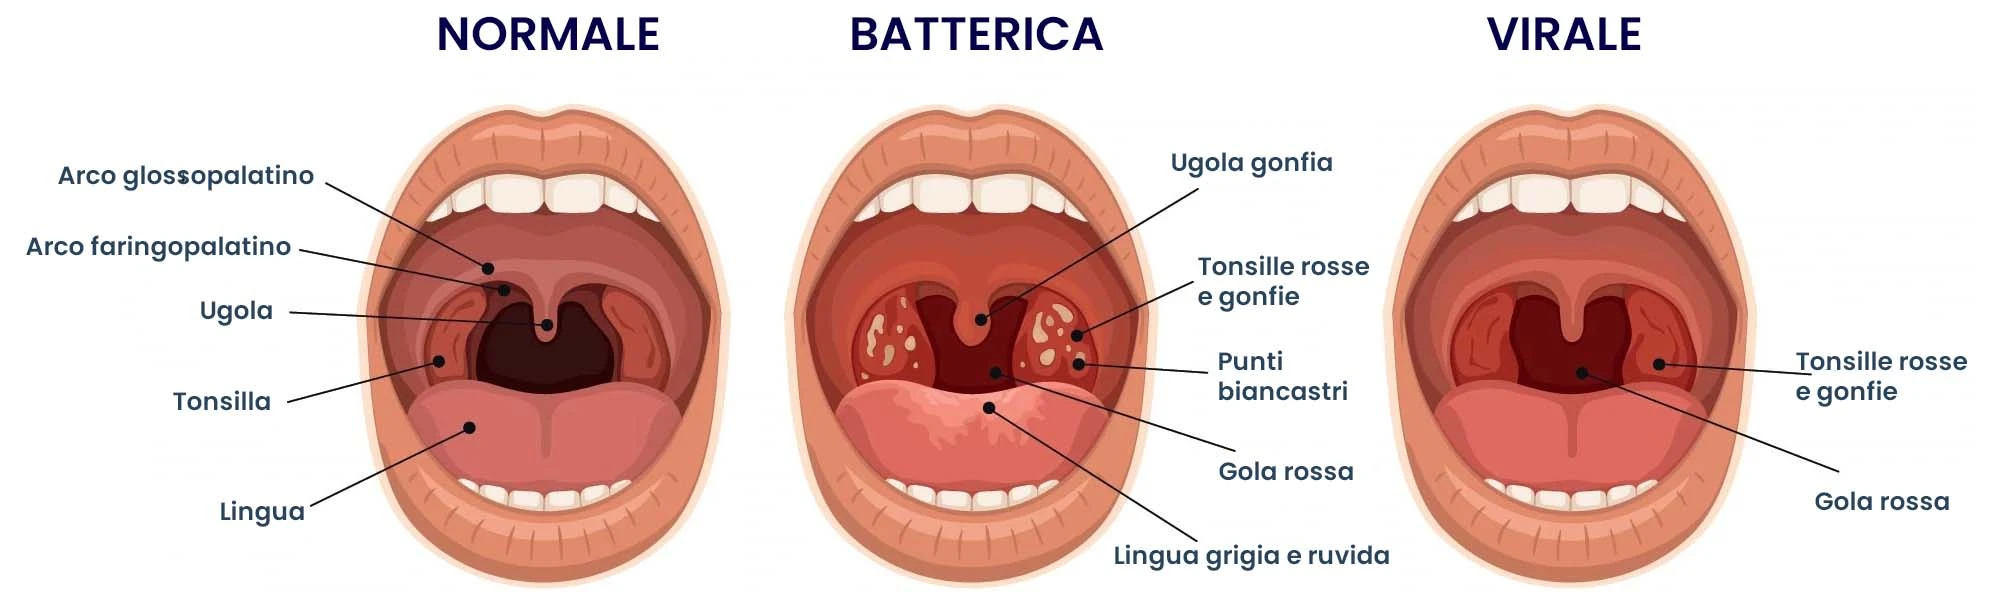 tonsillite batterica e virale